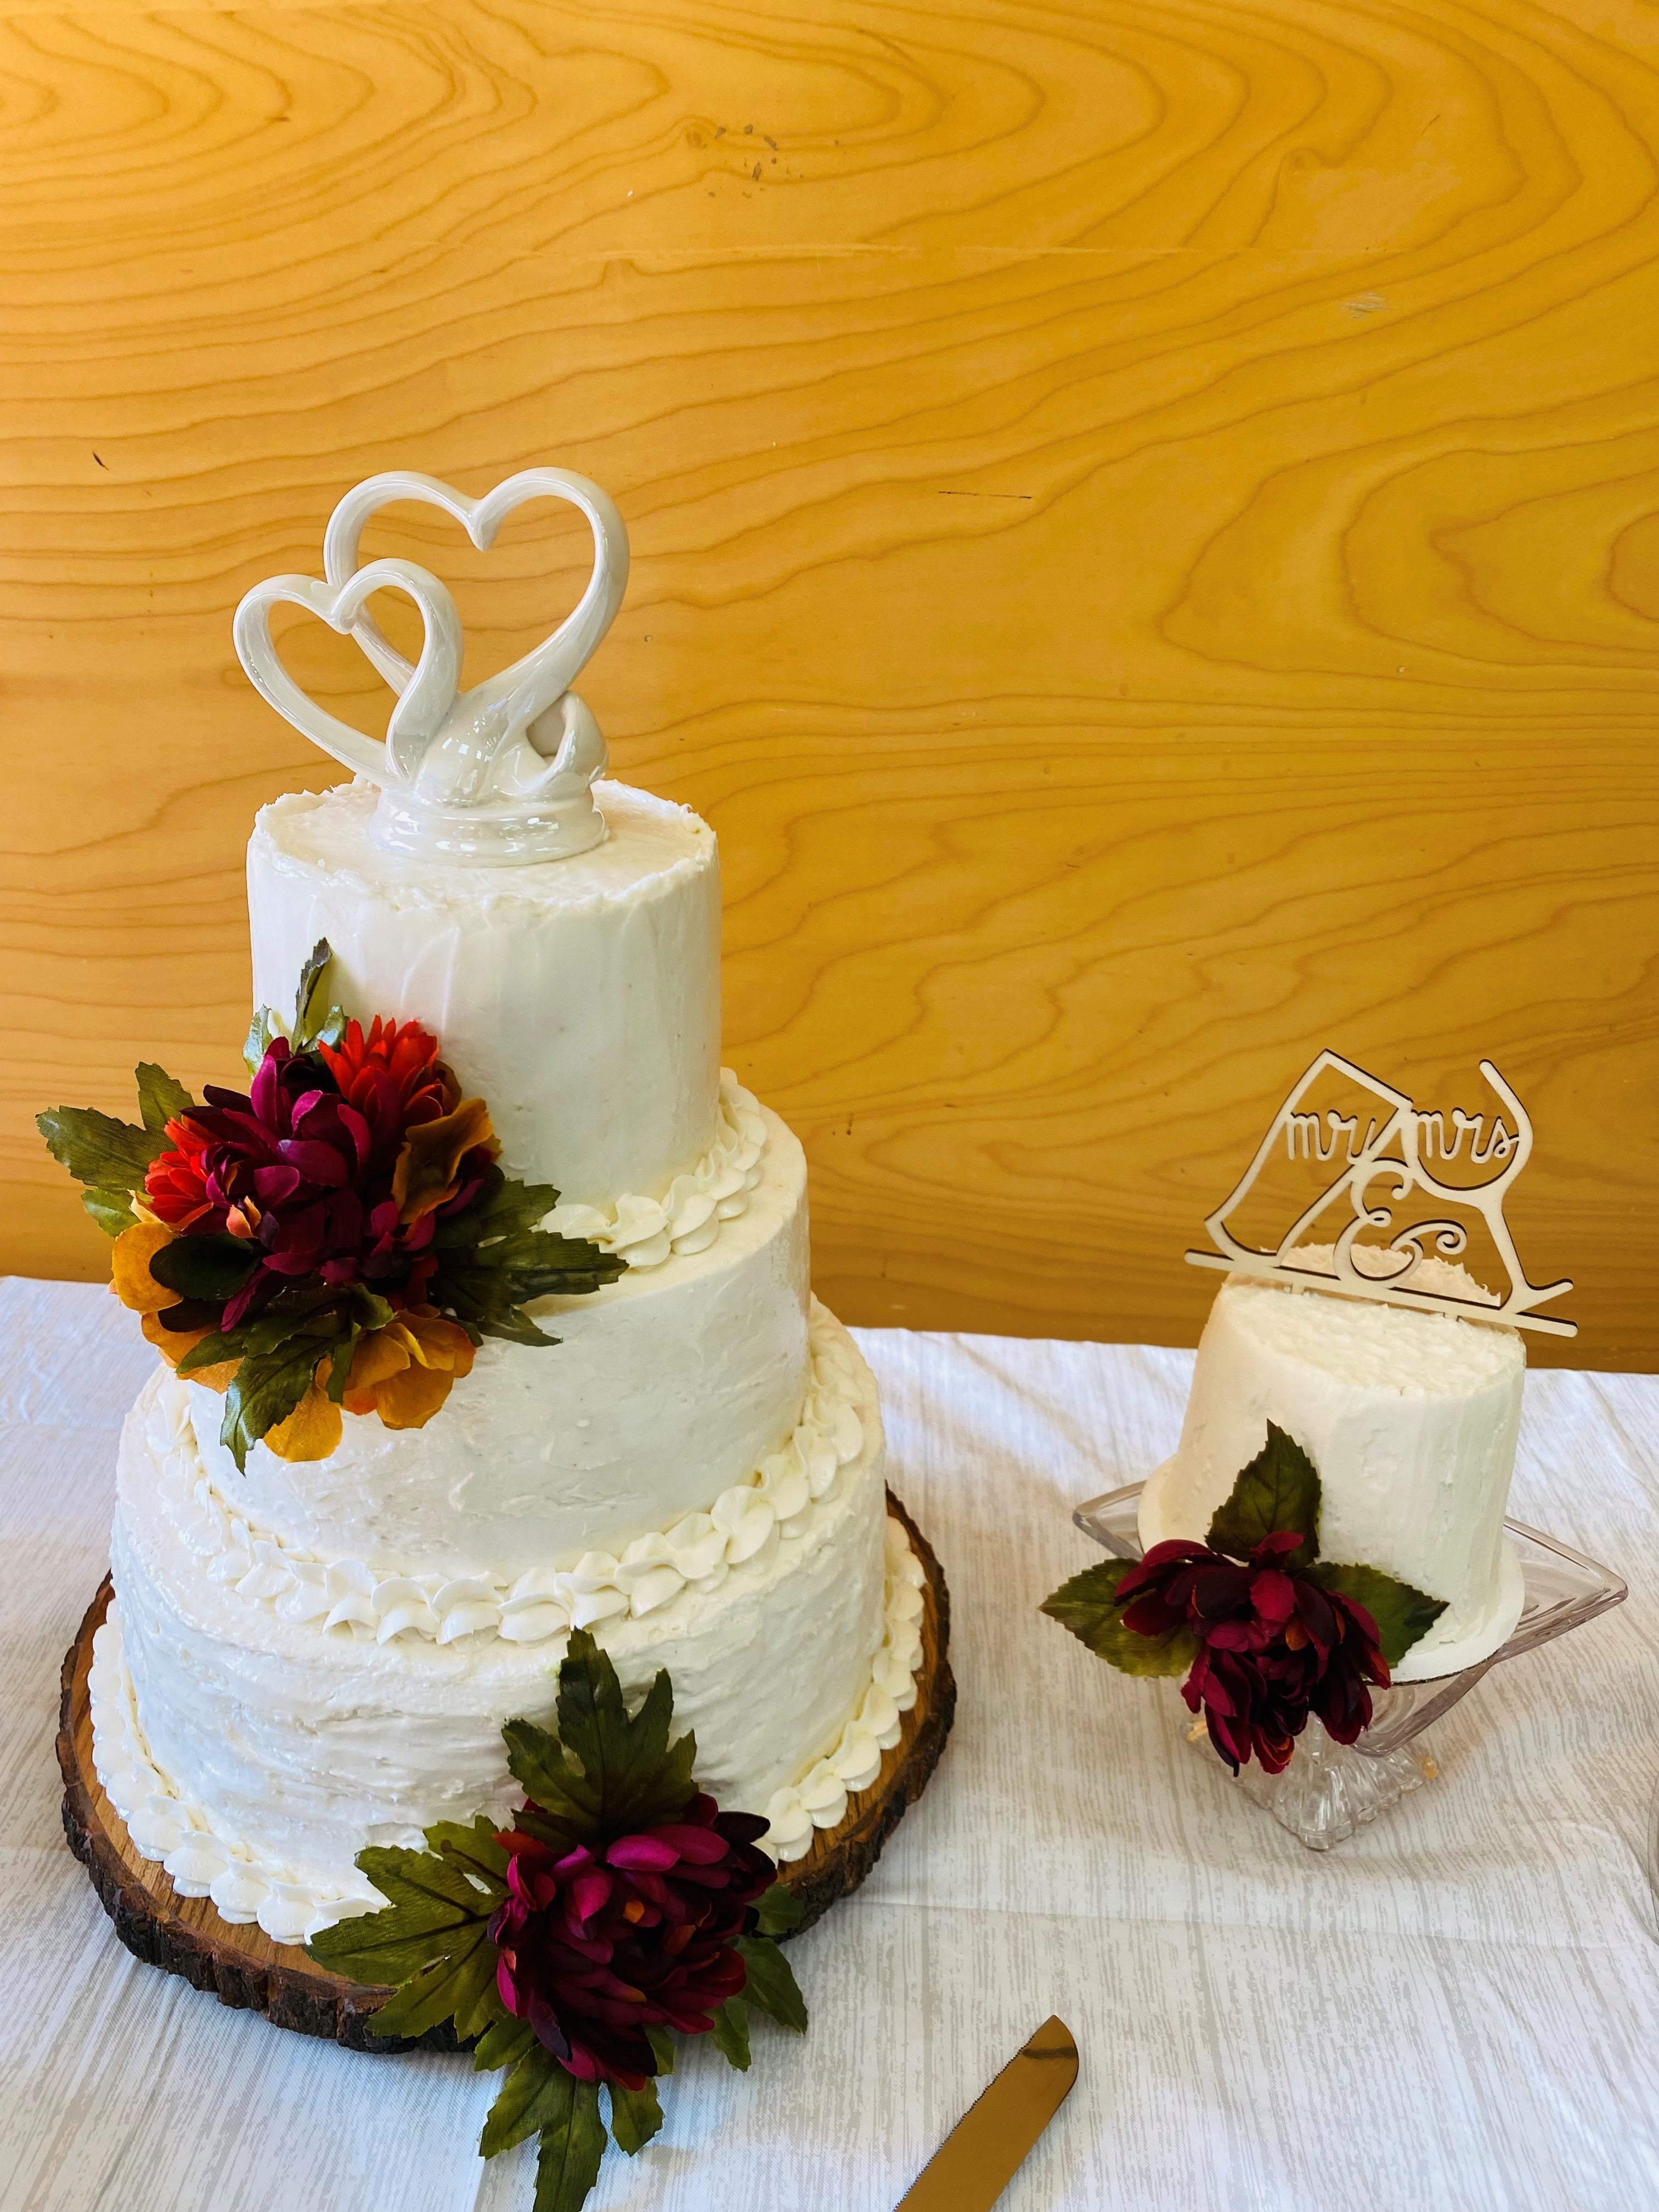 October Ventito Bakery Wedding Cake and Anniversary Cake